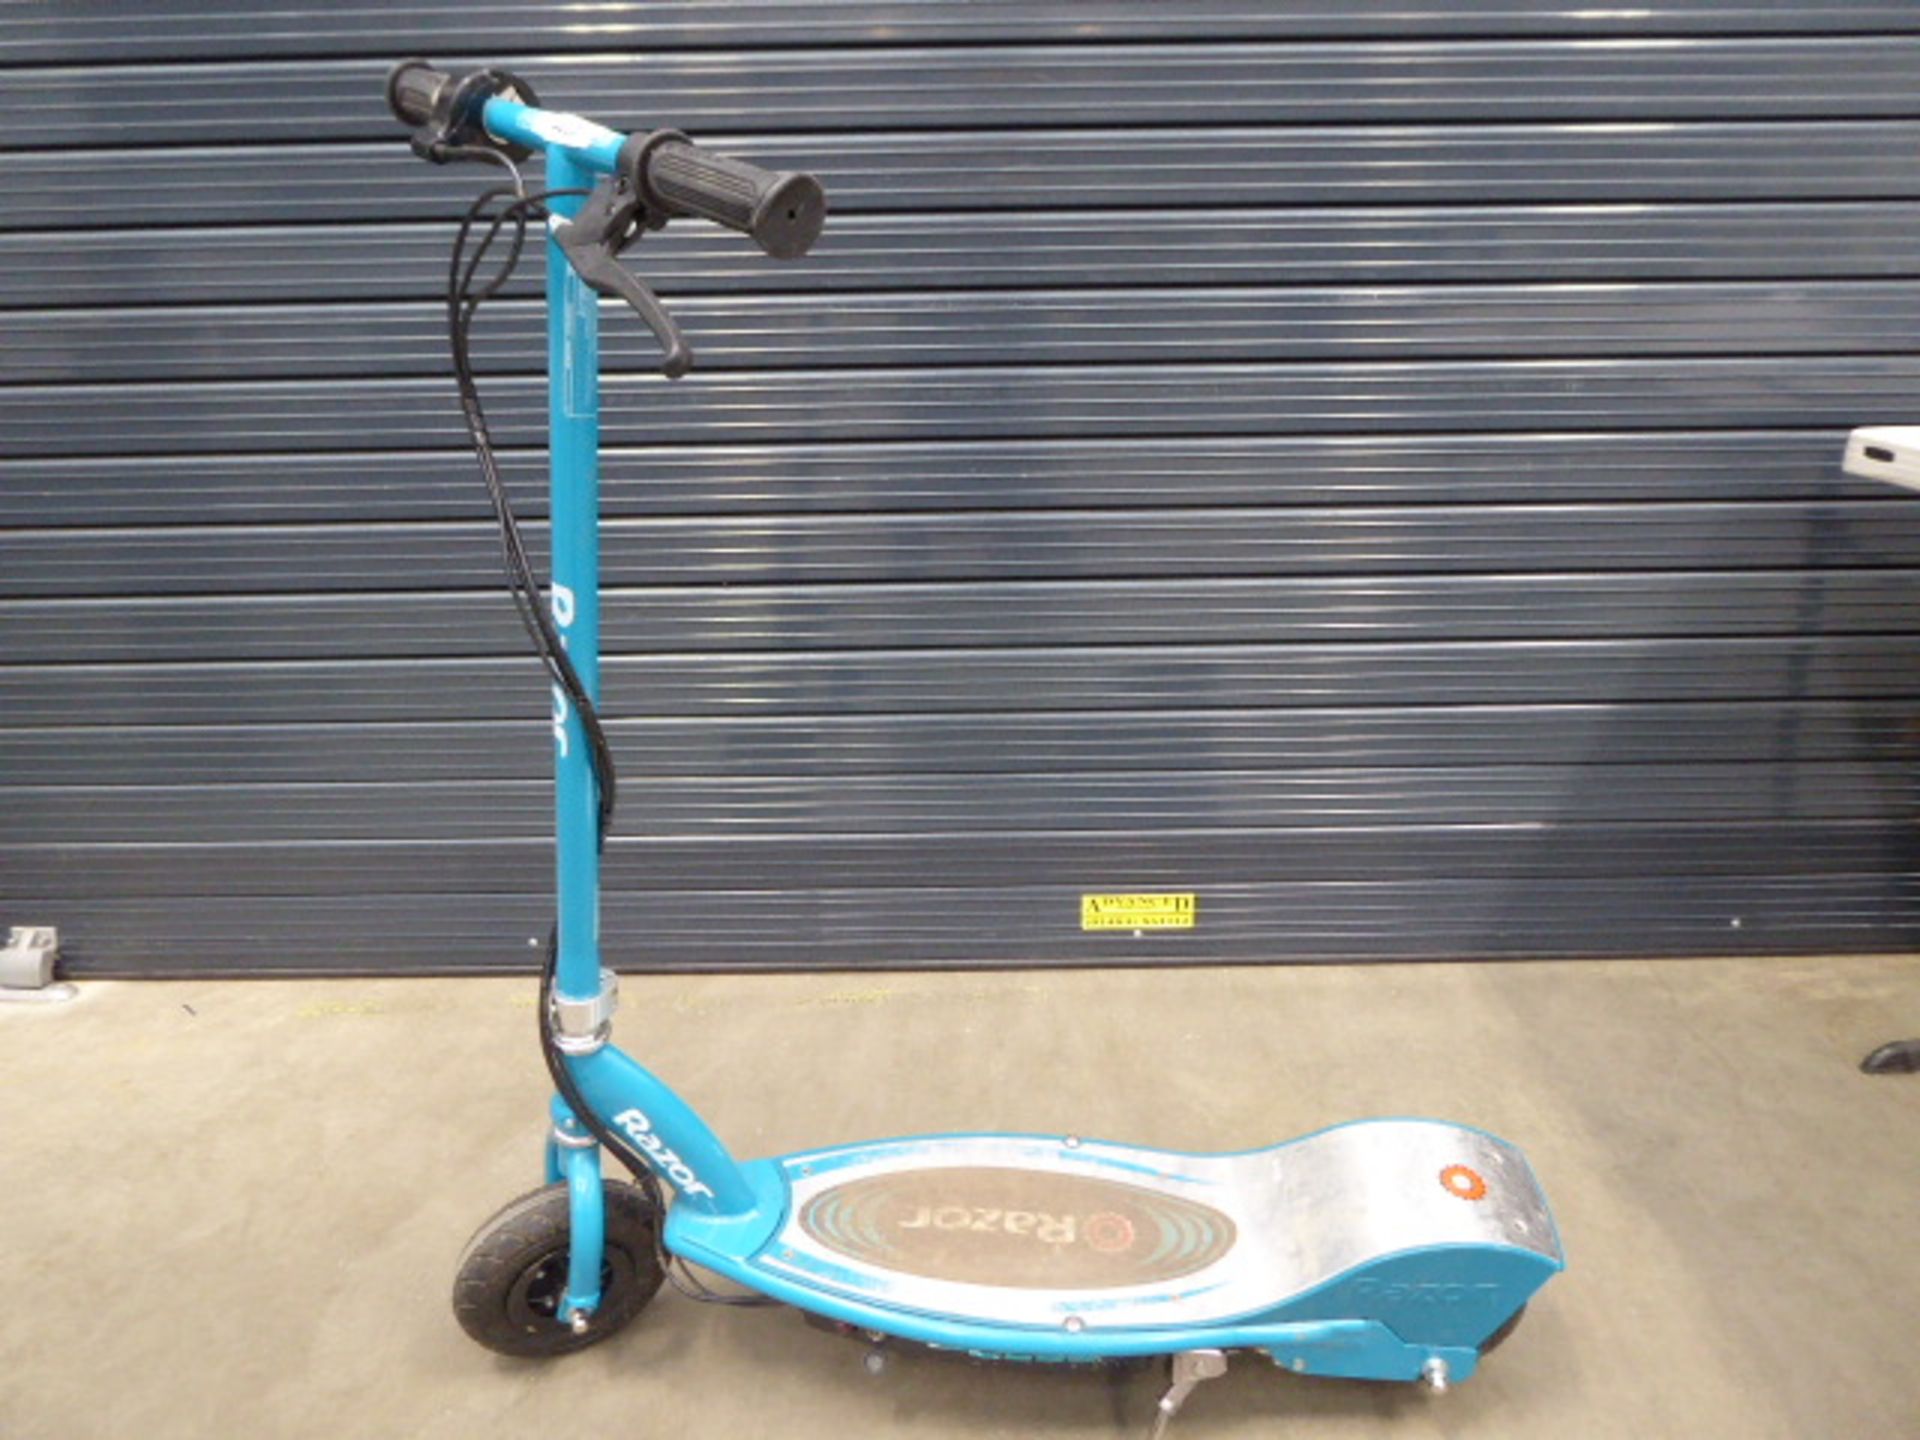 4034 - Turquoise Razor electric scooter